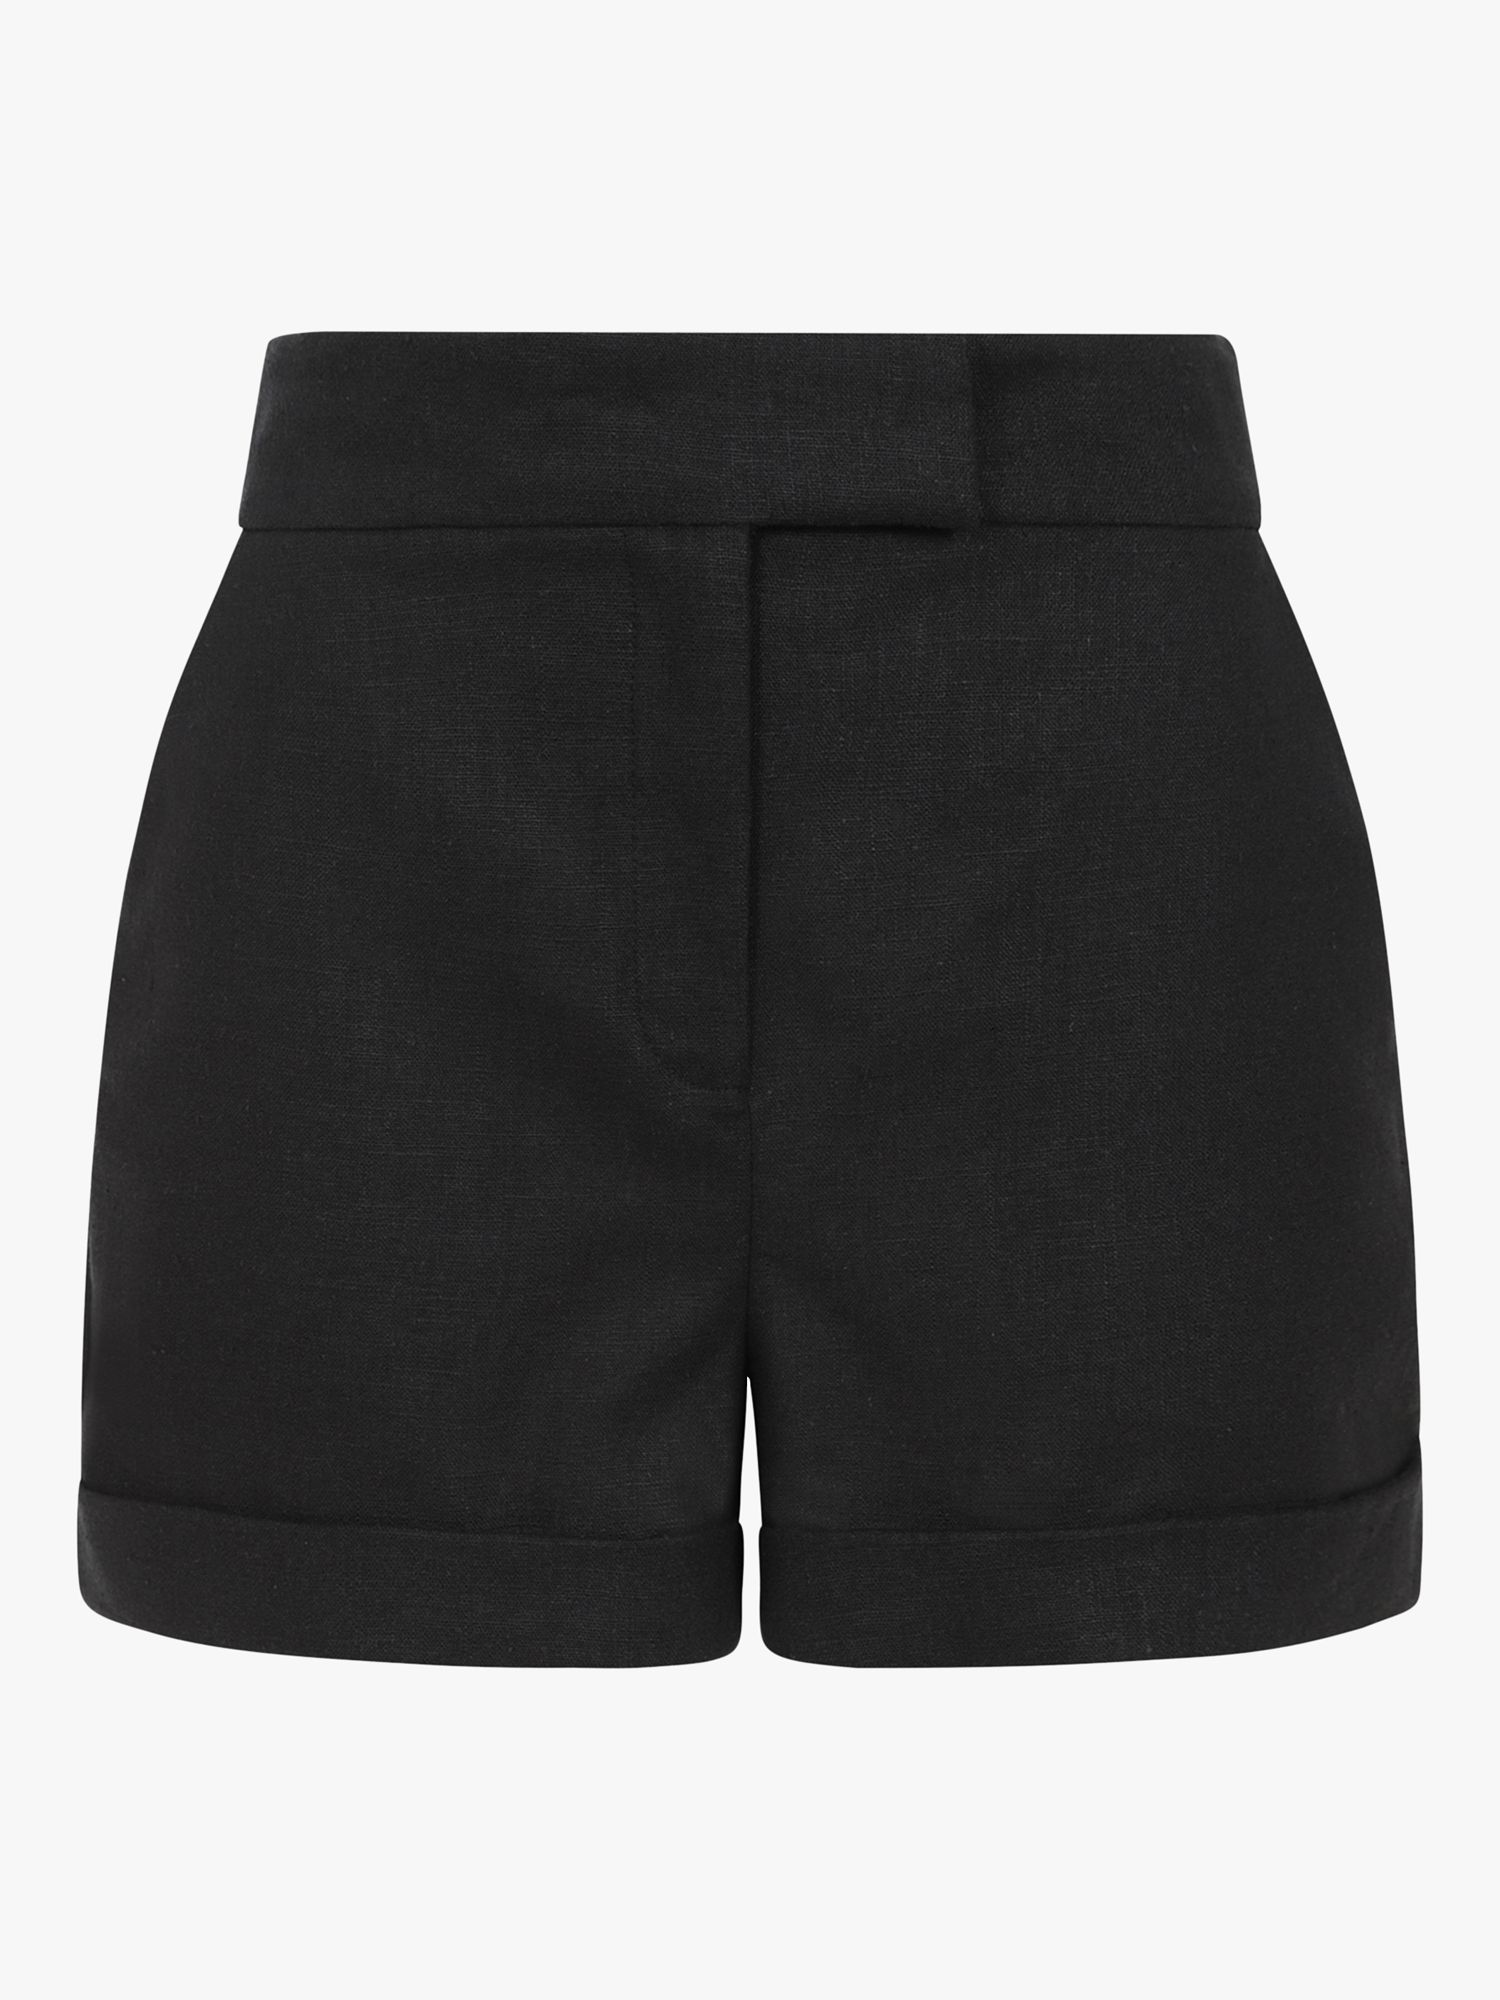 HotSquash Linen Shorts, Black, 8